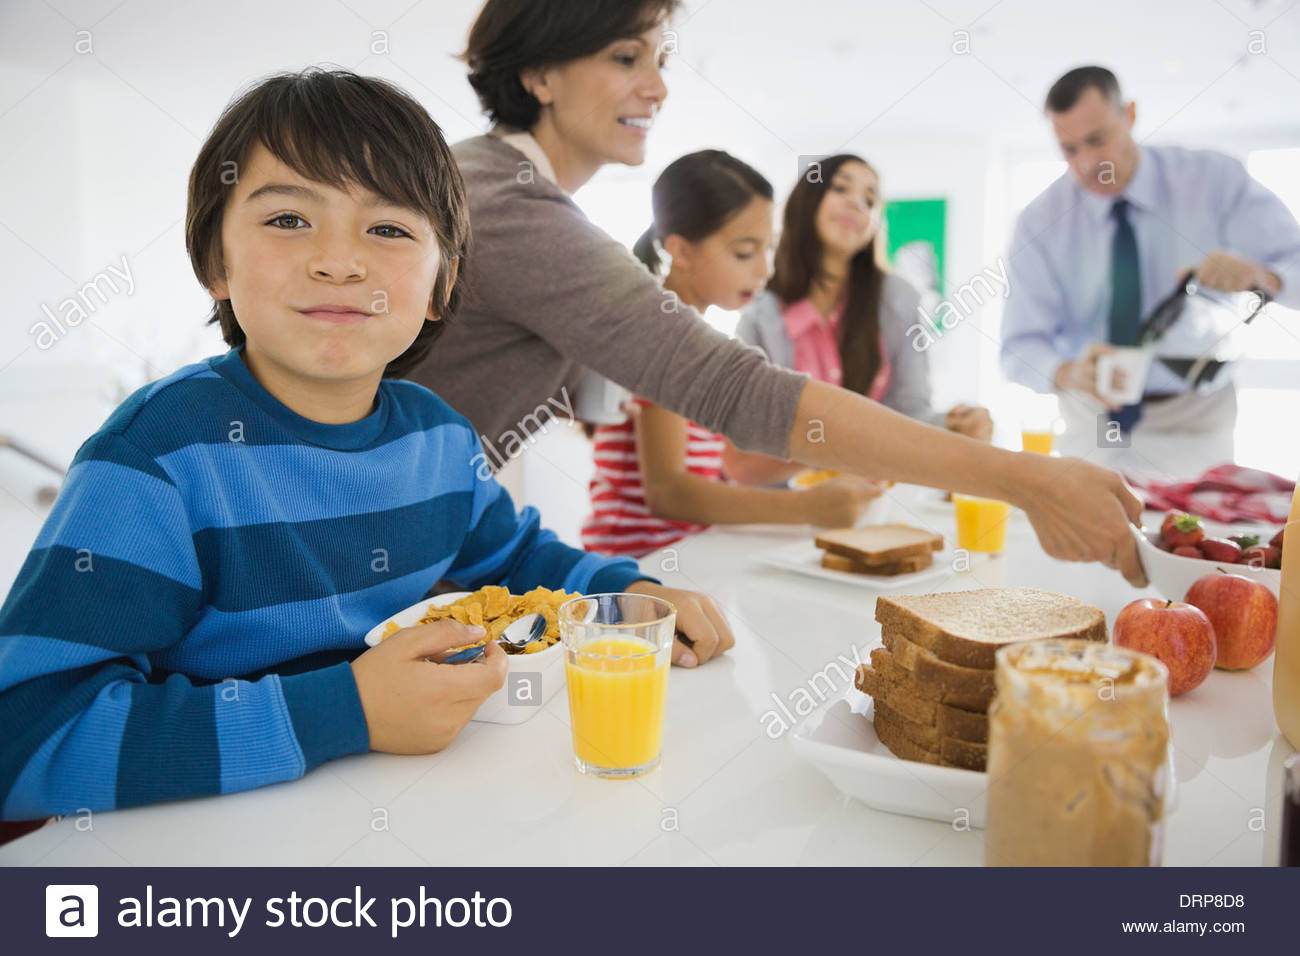 Portrait of boy having breakfast with family Stock Photo